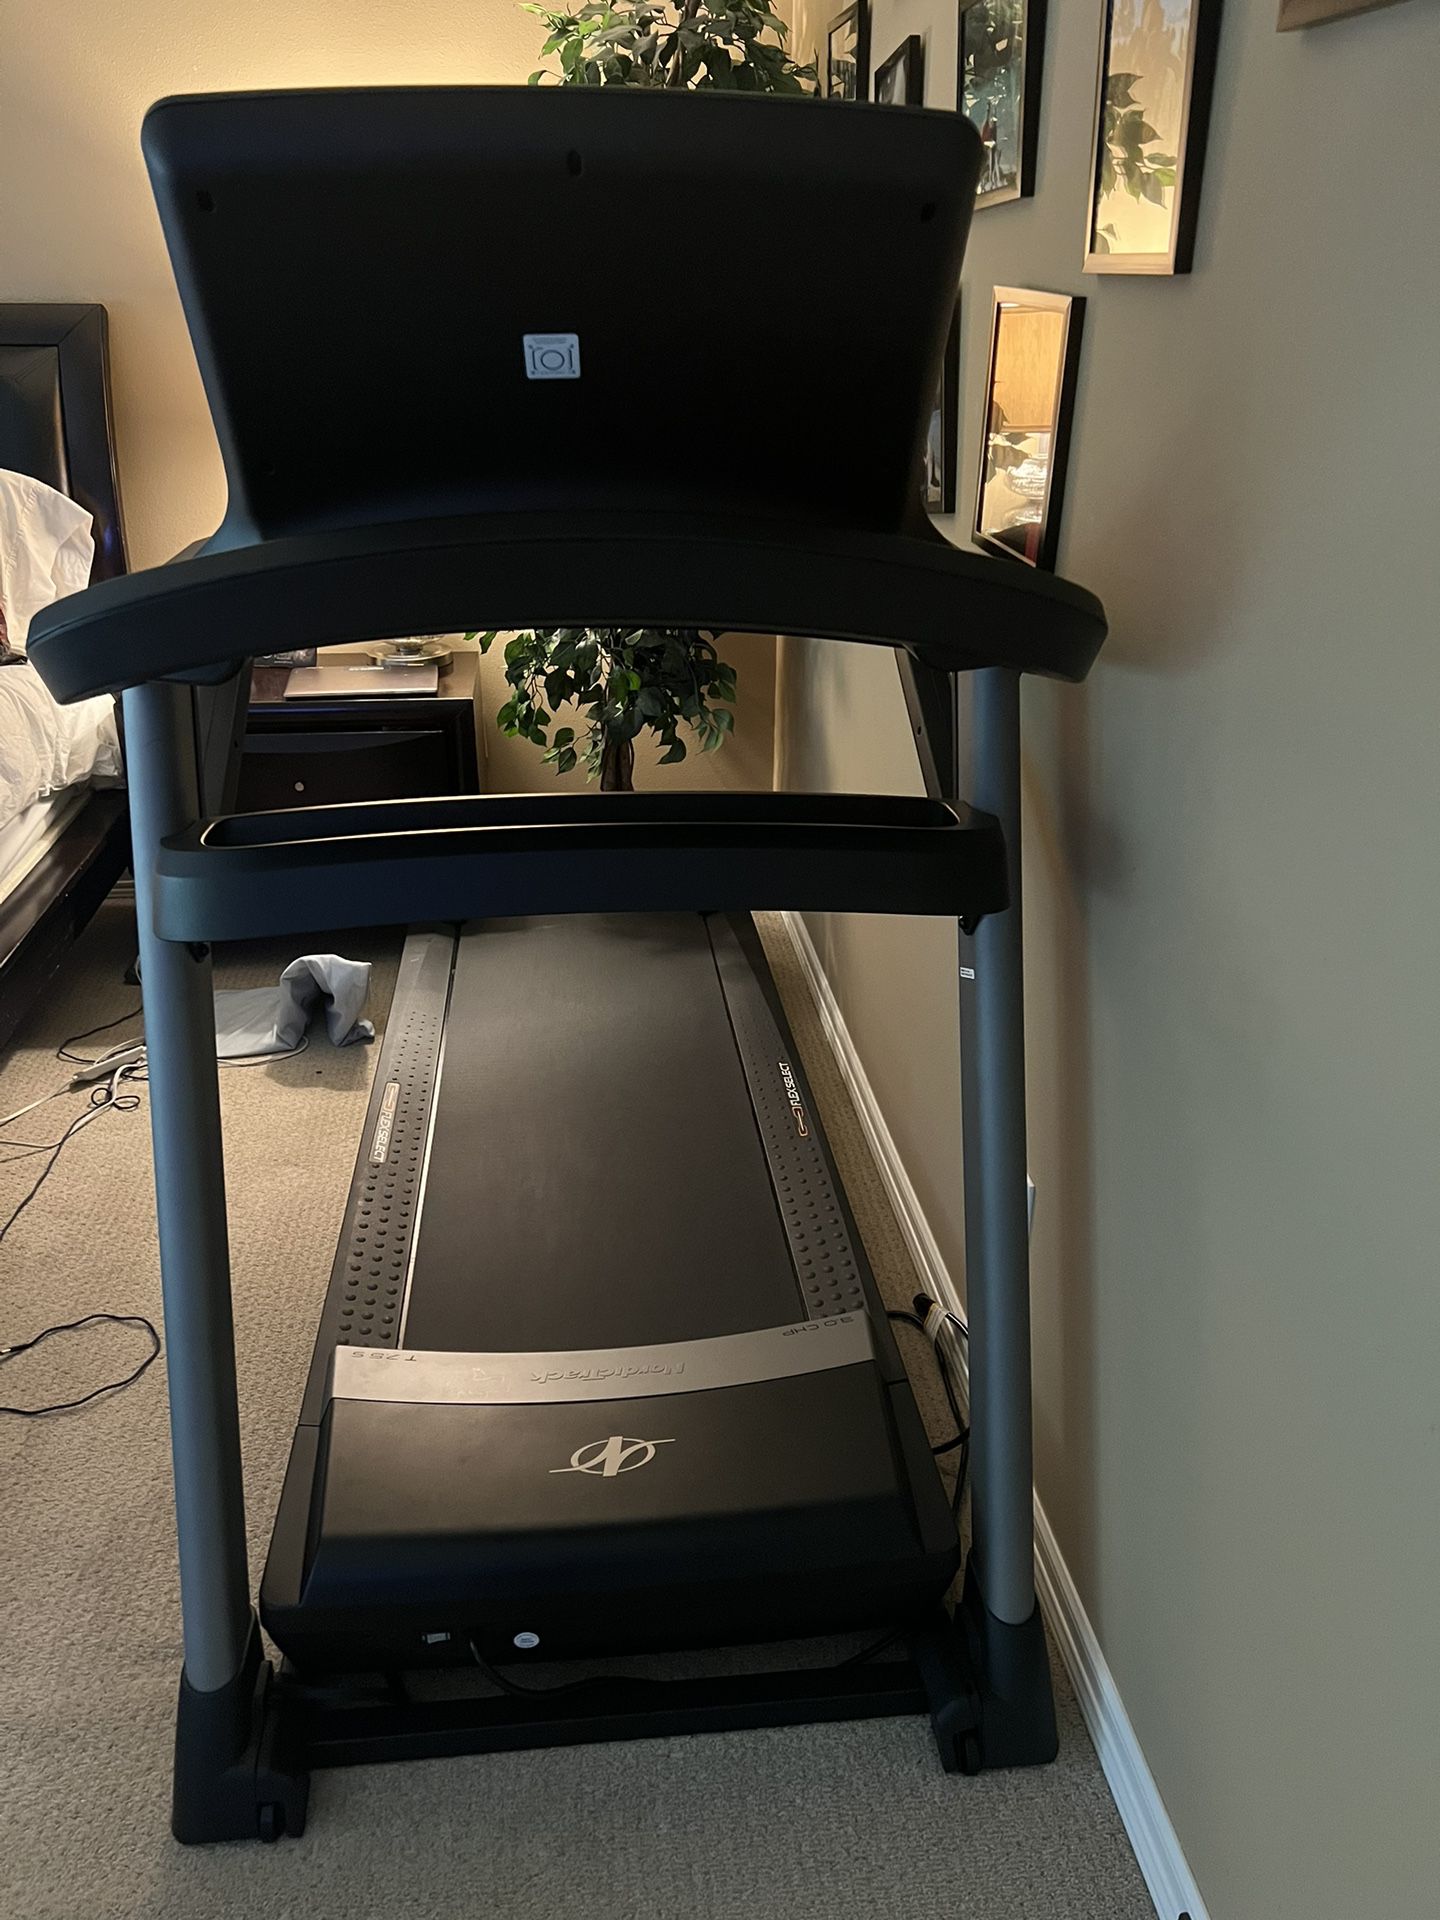 NordicTrack Treadmill T7.5S